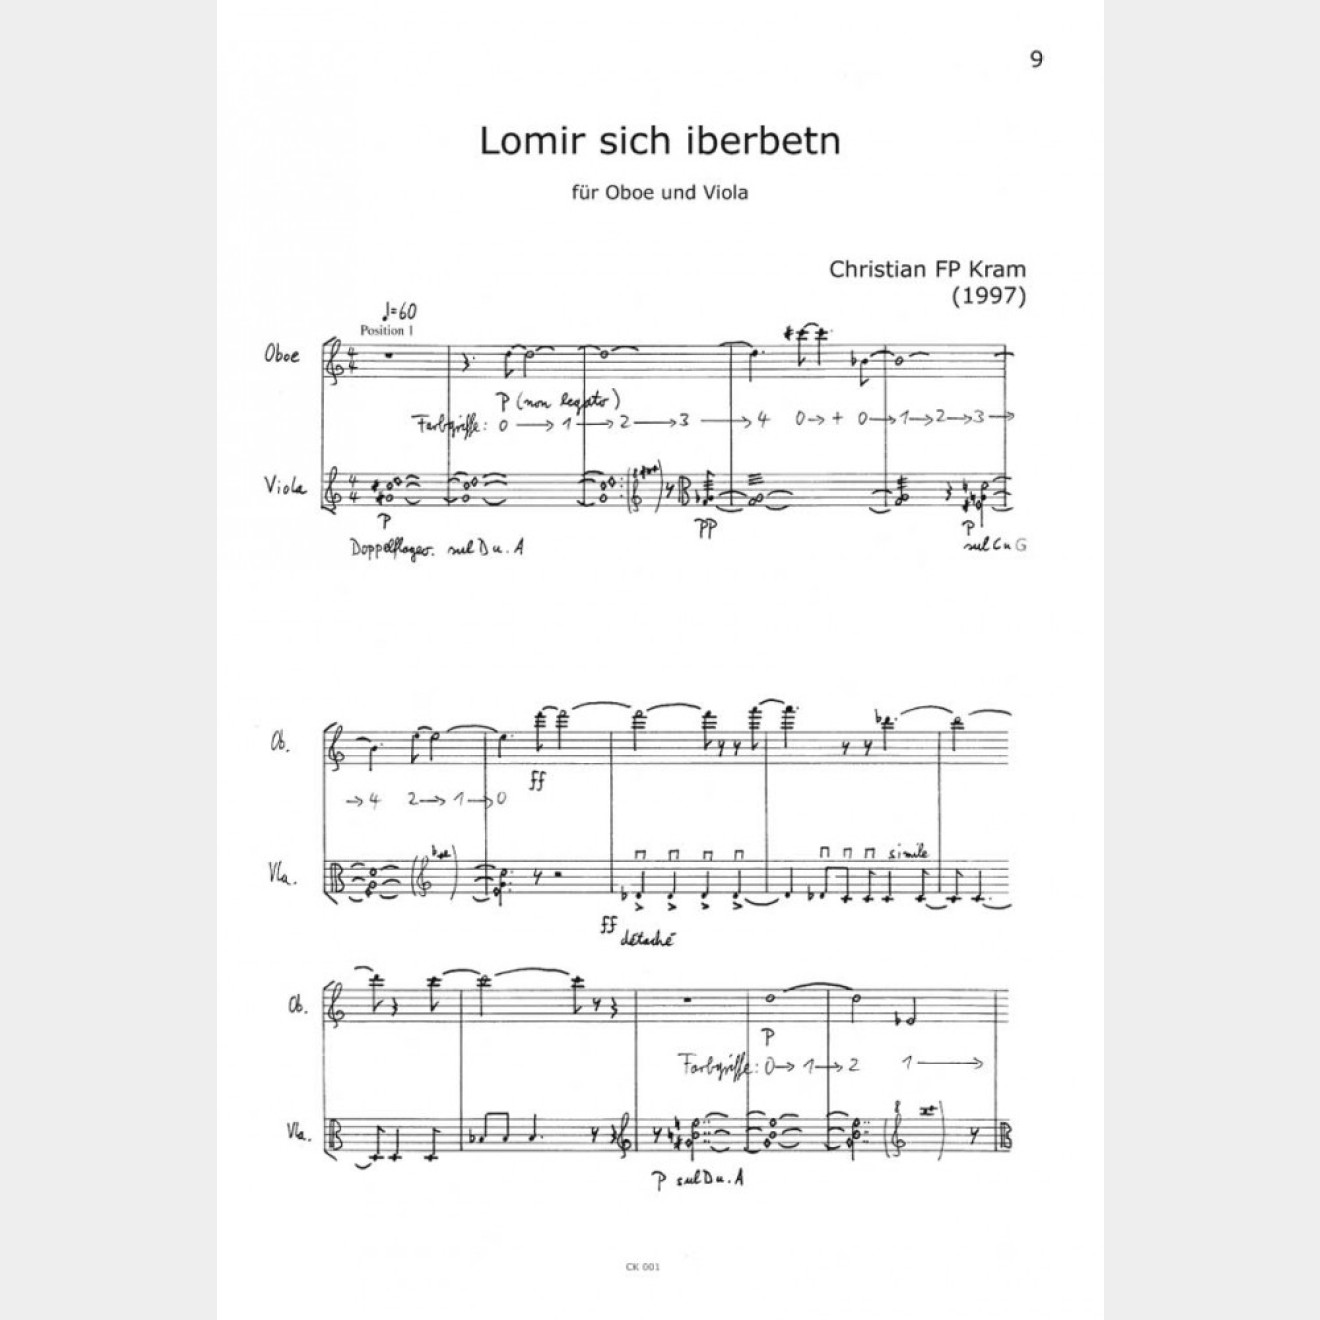 Lomir sich iberbetn (Score/Part)